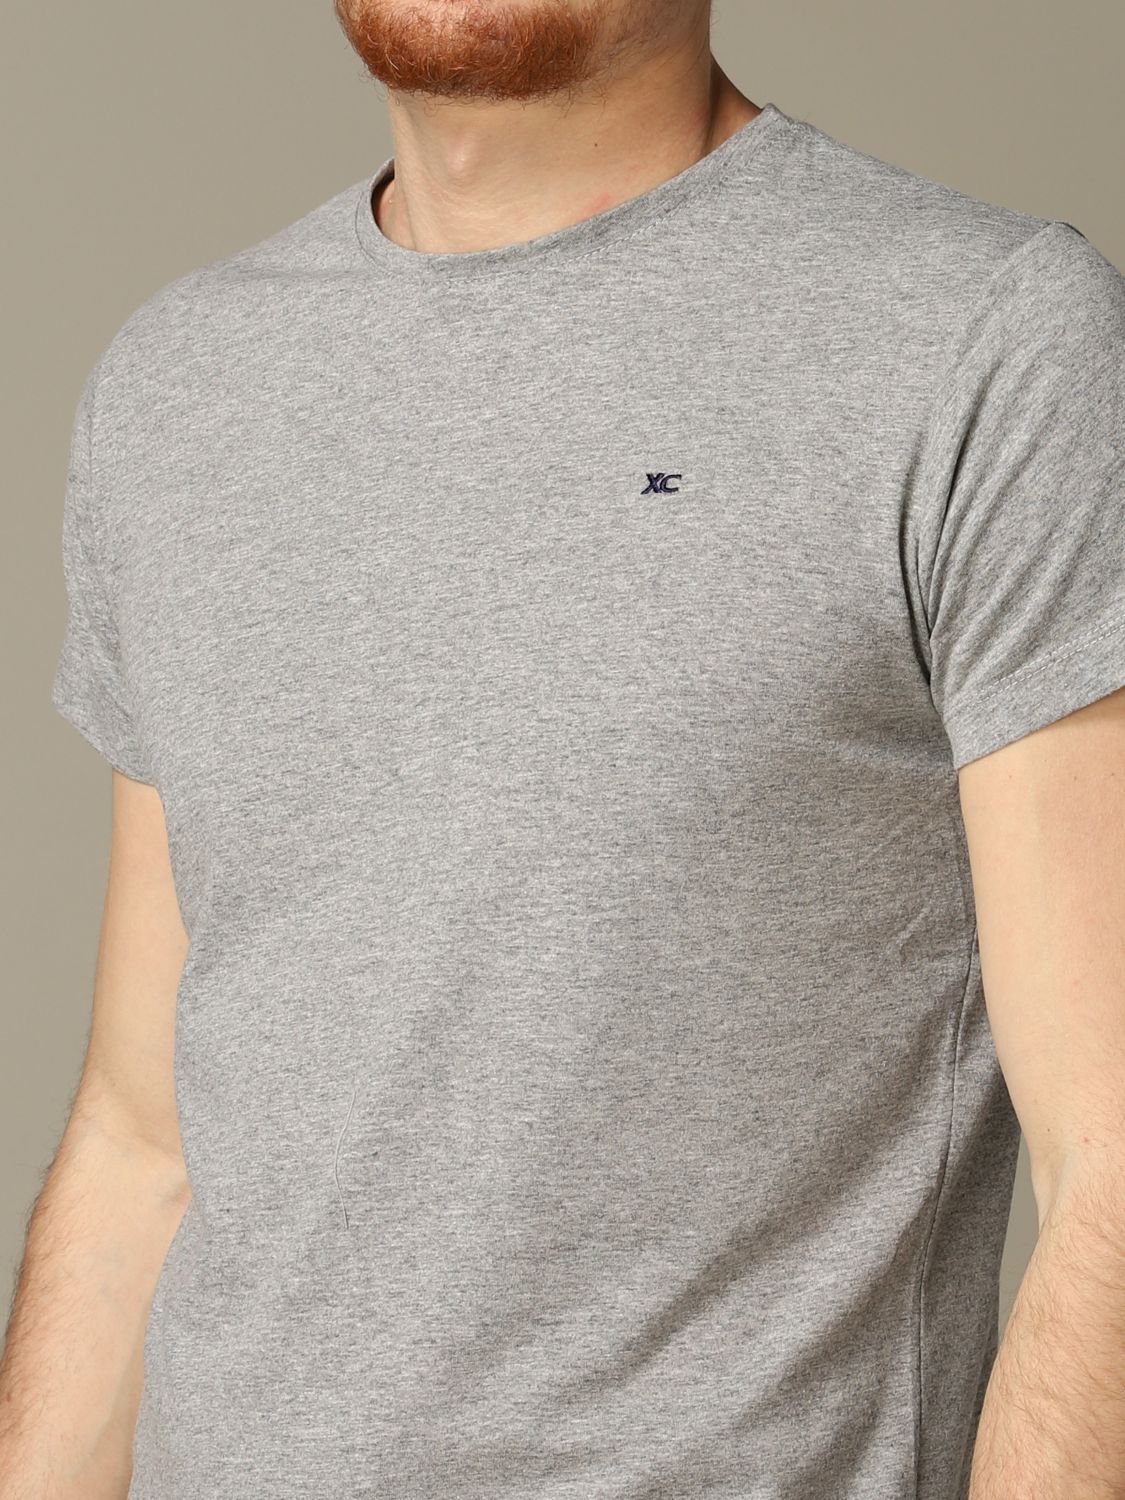 Xc Outlet: T-shirt men | T-Shirt Xc Men Grey | T-Shirt Xc T-SHIRT M